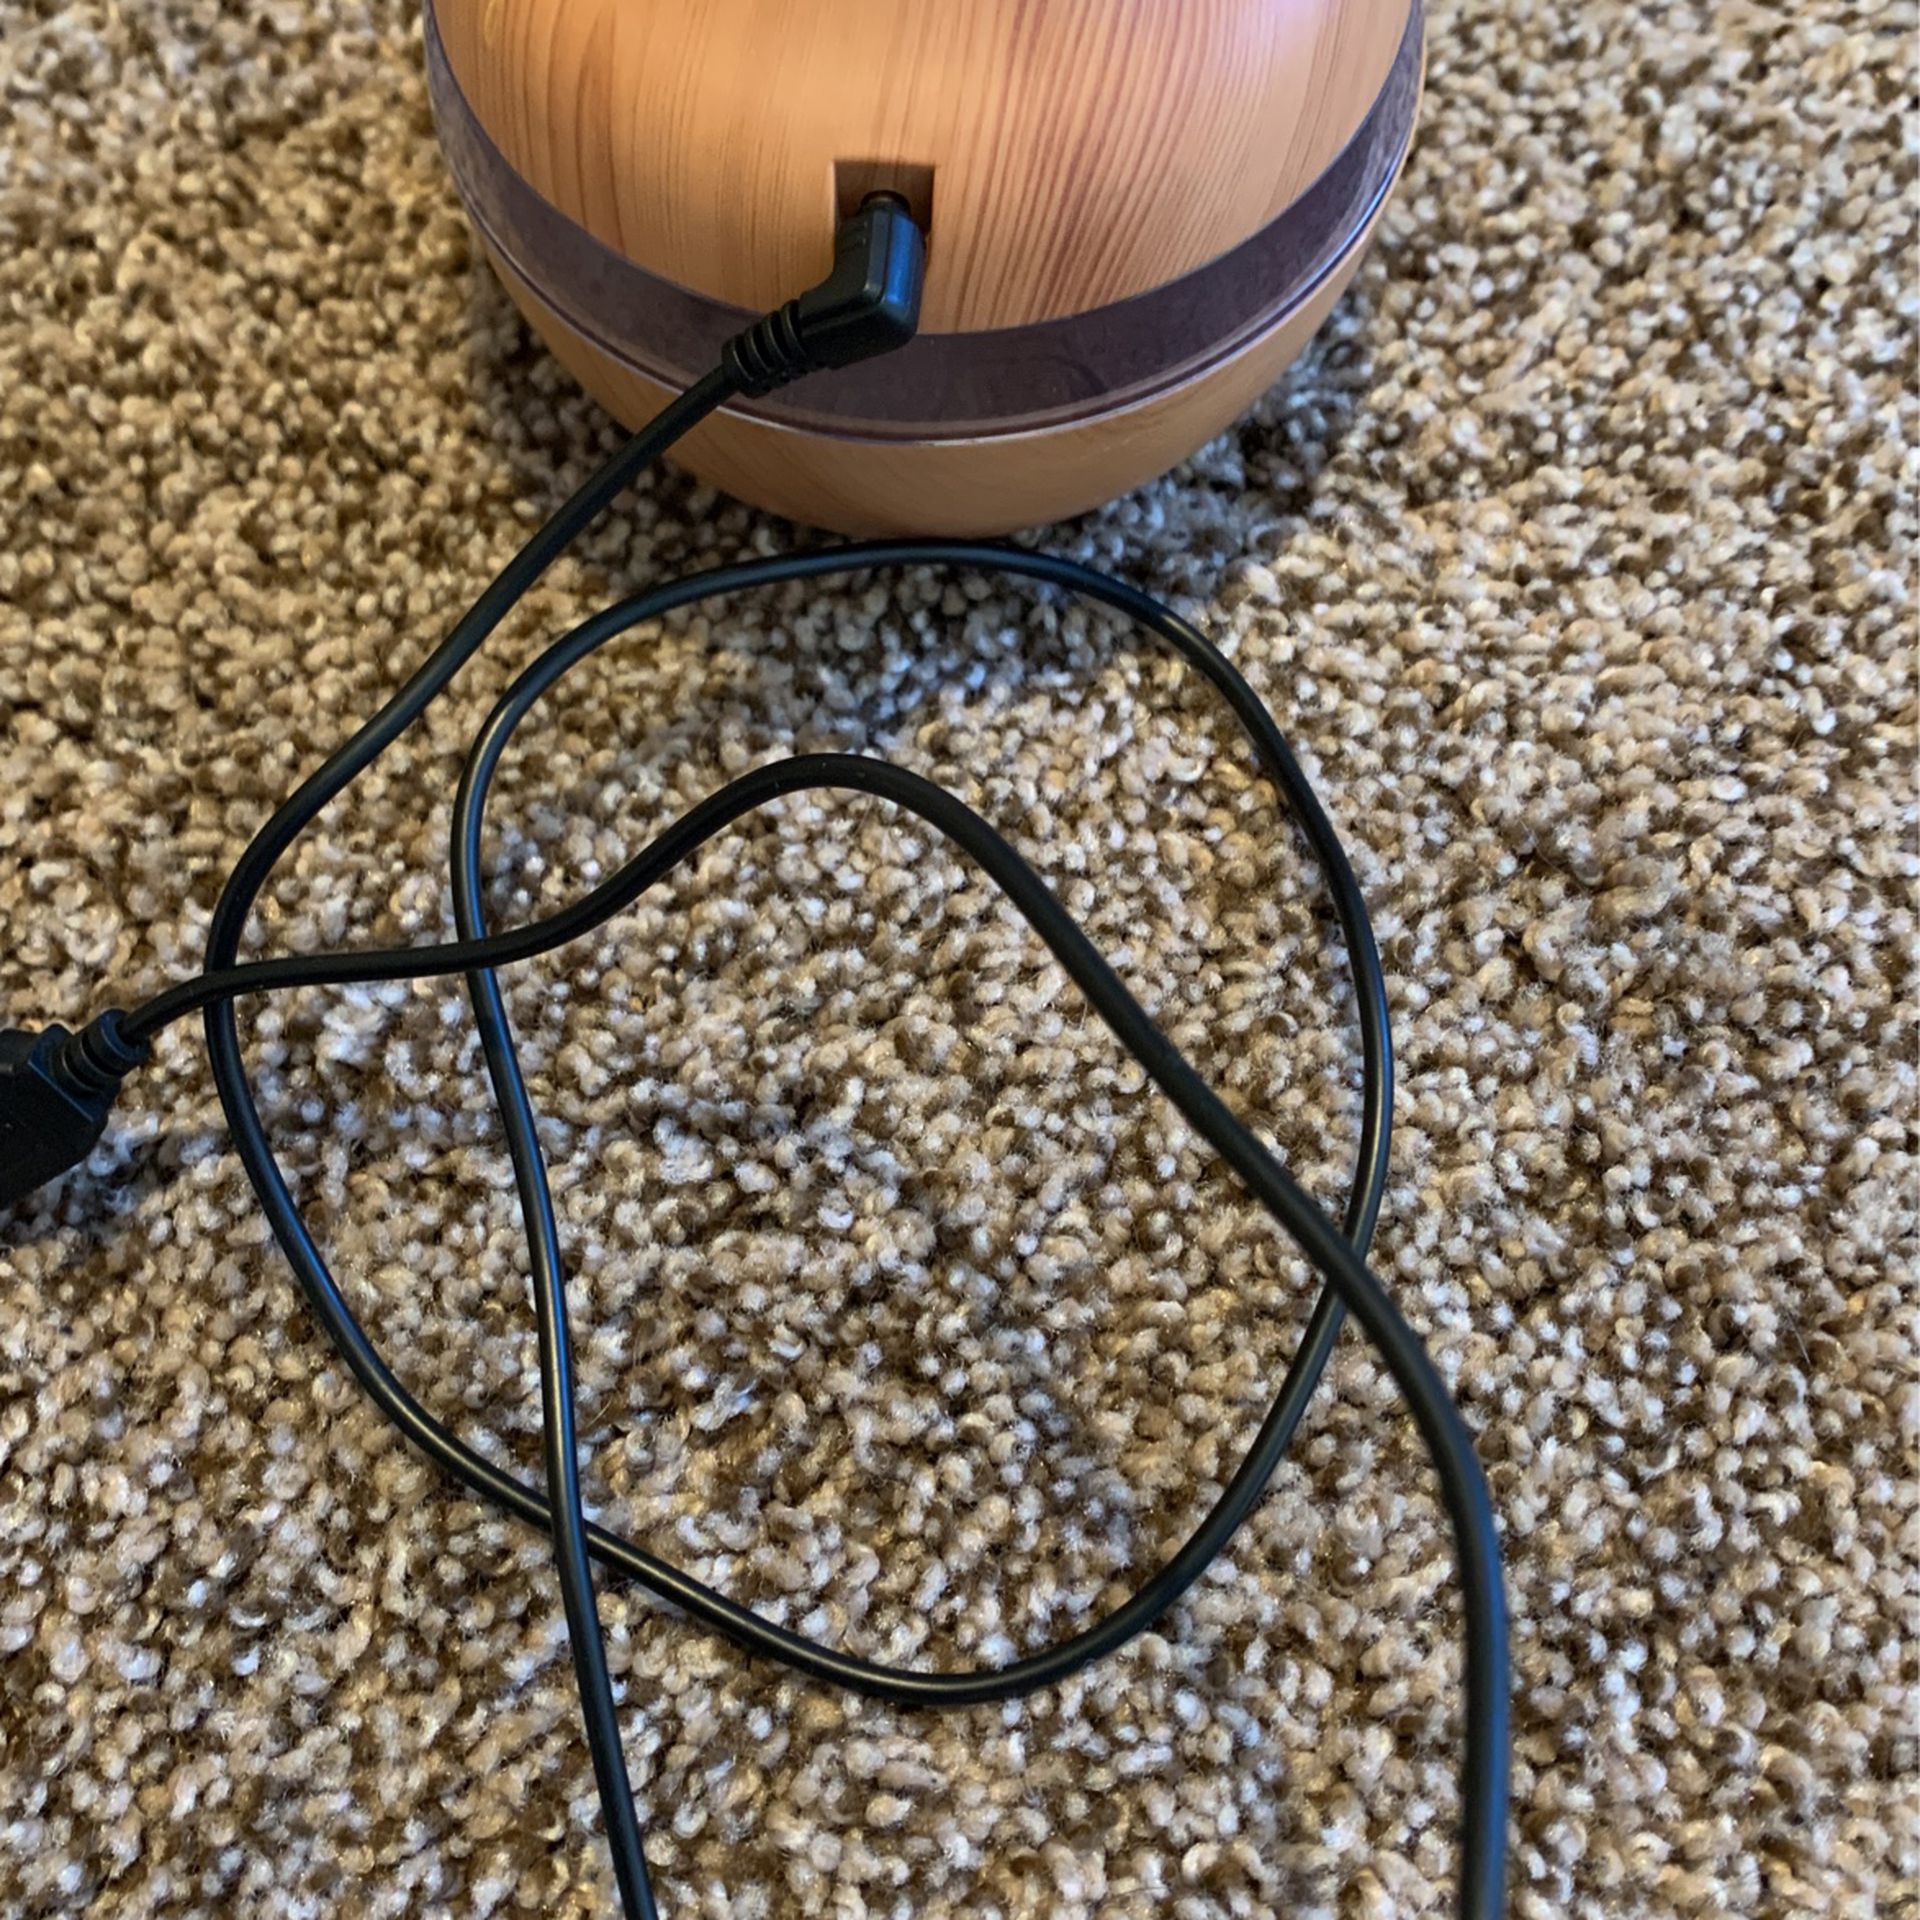 Humidifier - Wood